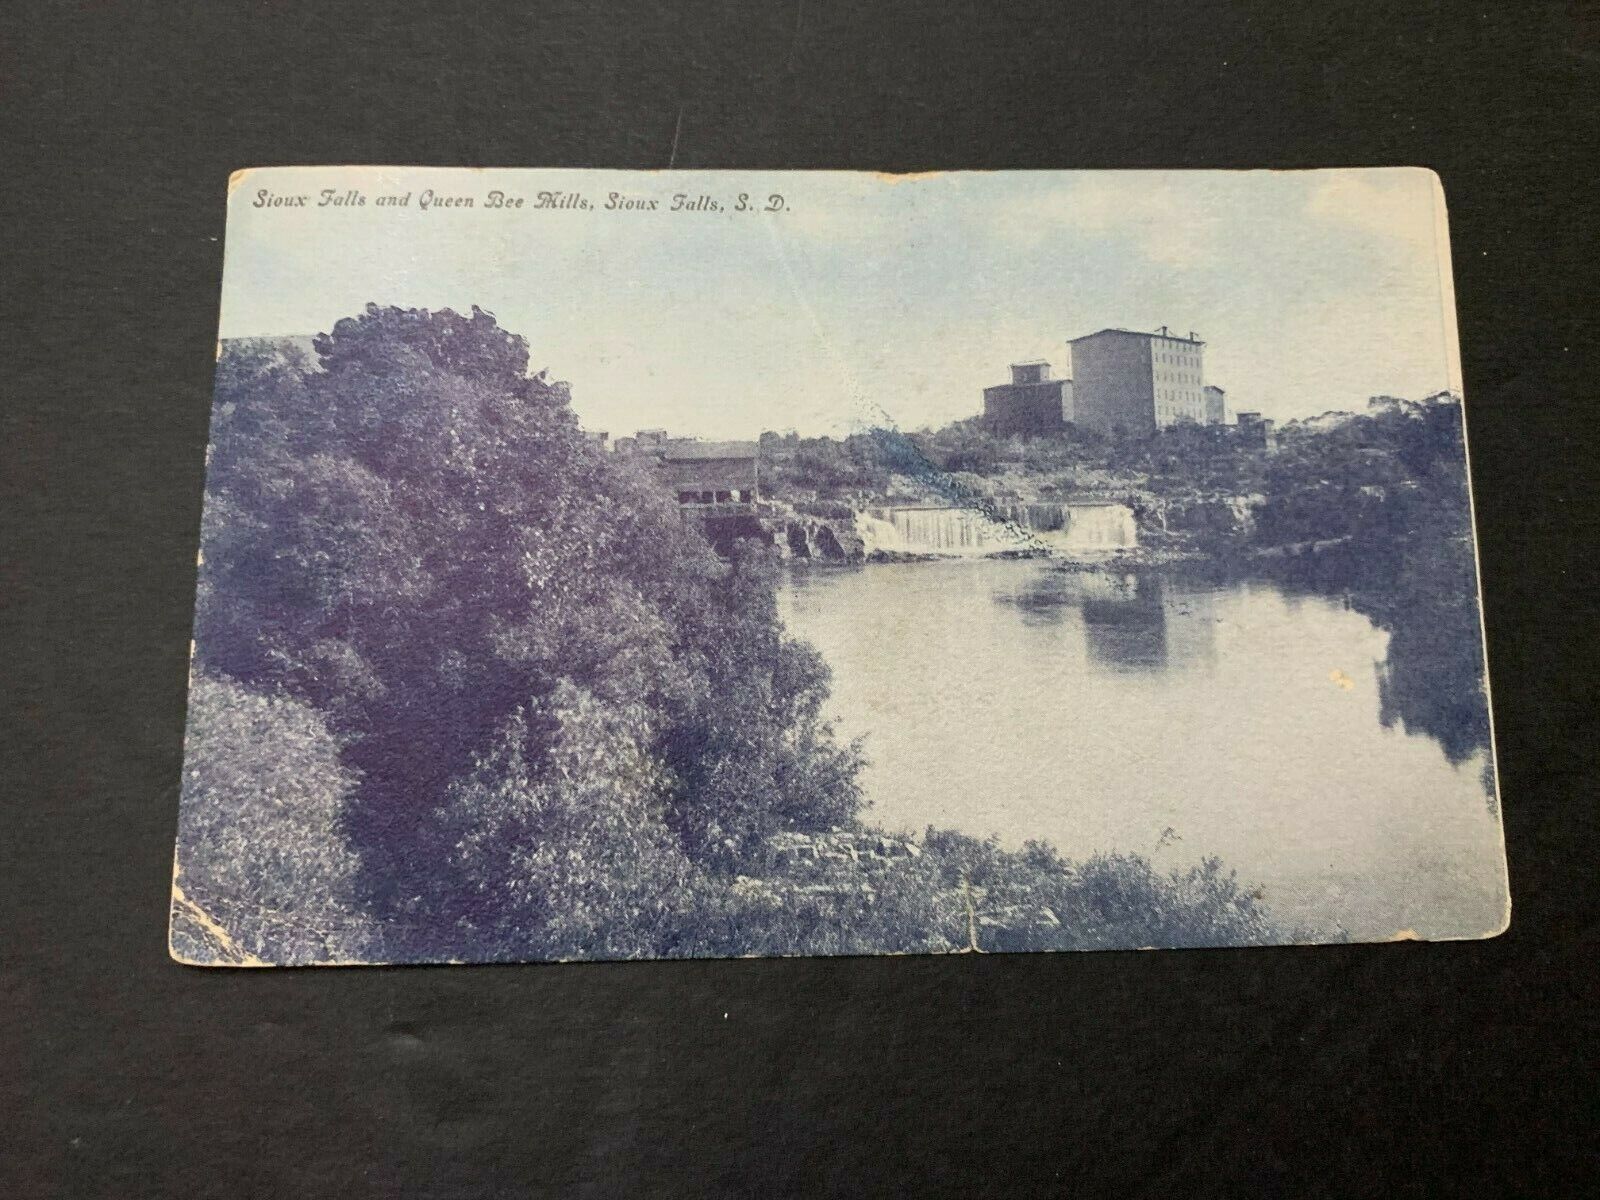 1909 Sioux Falls and Queen Bee Mills Sioux Falls South Dakota Postcard